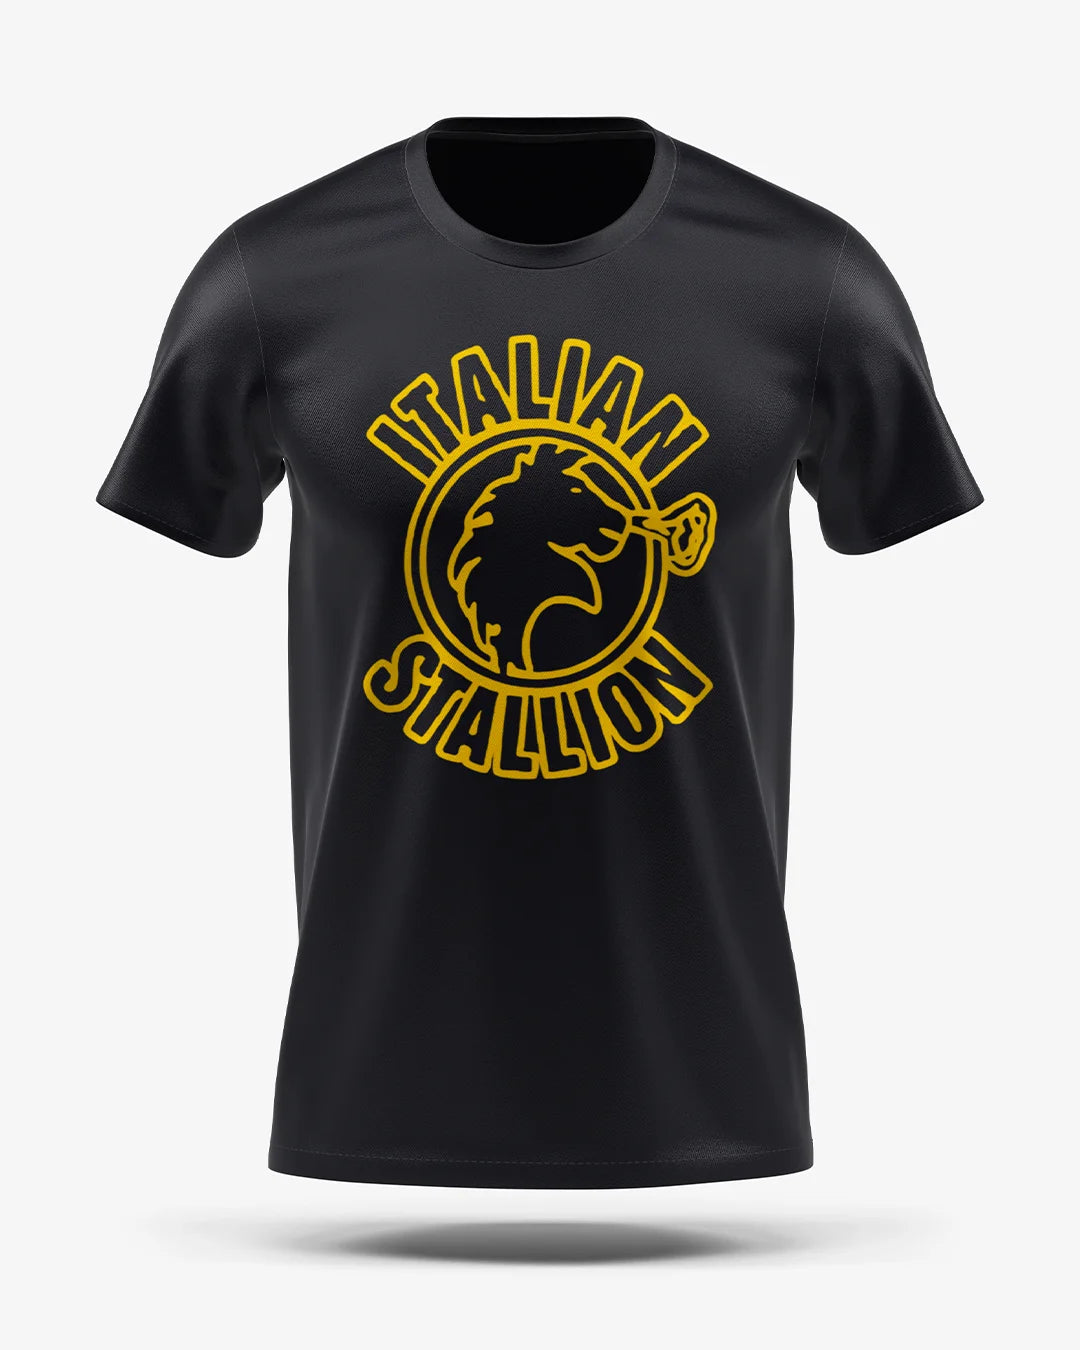 Camiseta Esporte Dry Fit - Rocky Black Italian Stallion